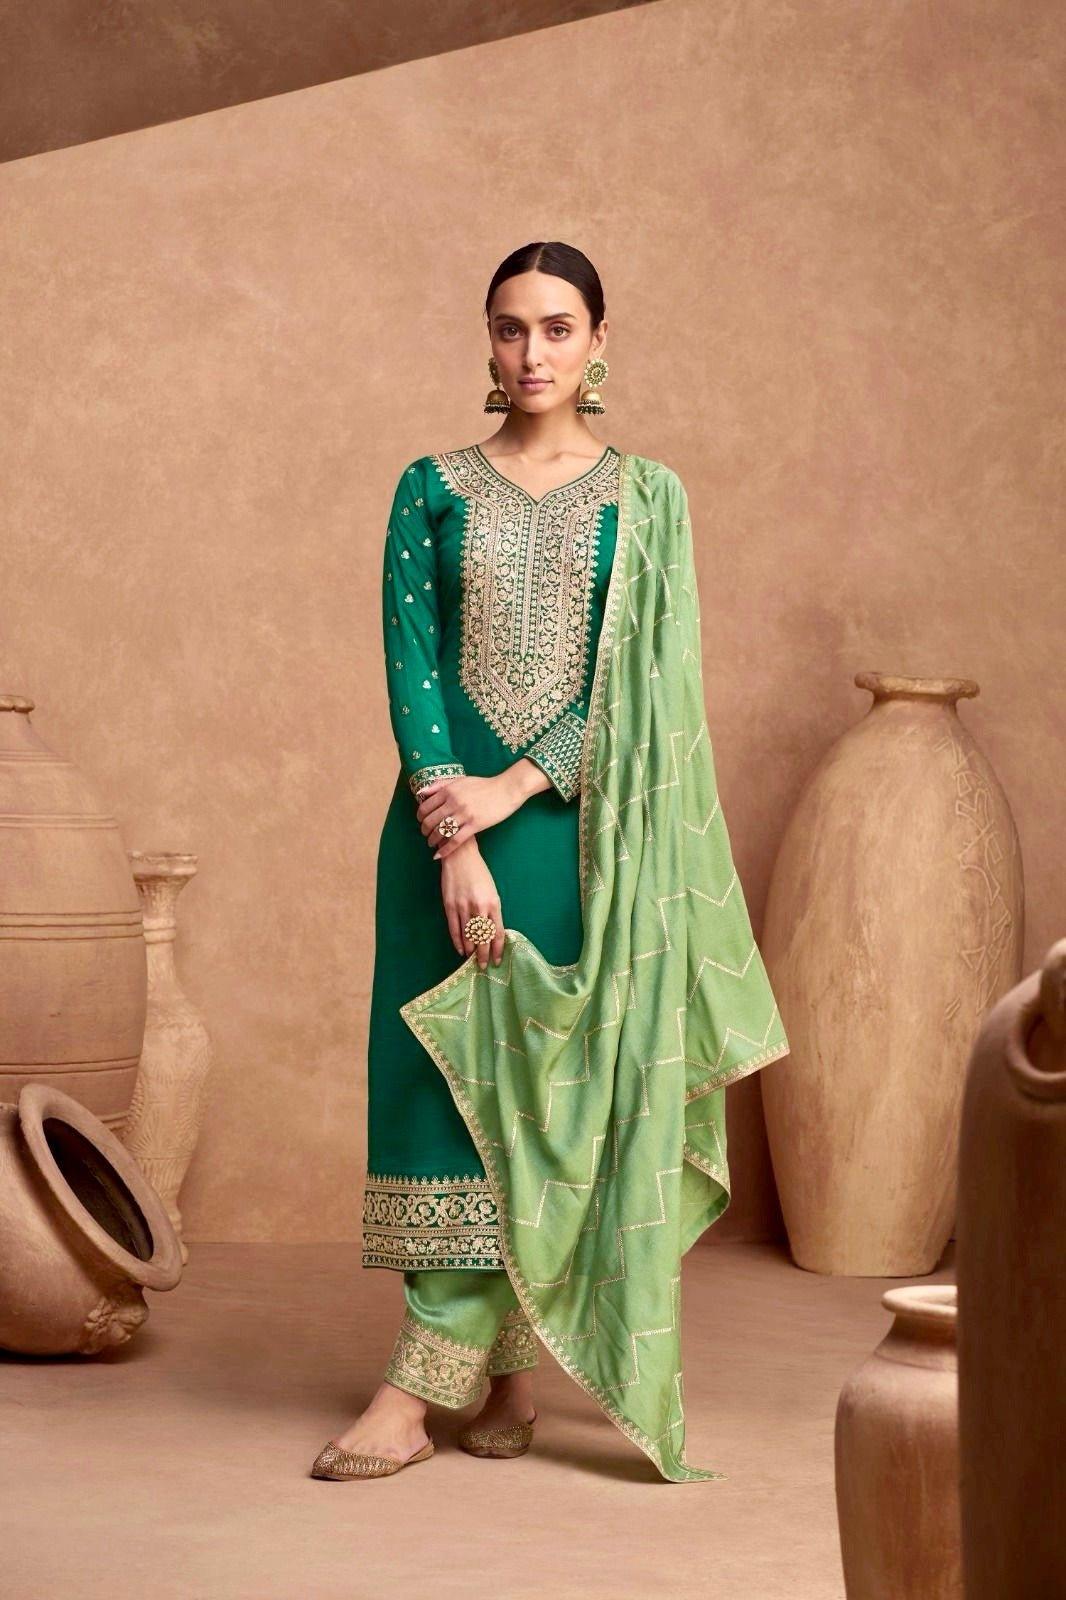 Bottle Green Silk with zari embroidery palazzo dress Indian/Pakistani wedding Eid Puja Party wear suit, M - Diana's Fashion Factory